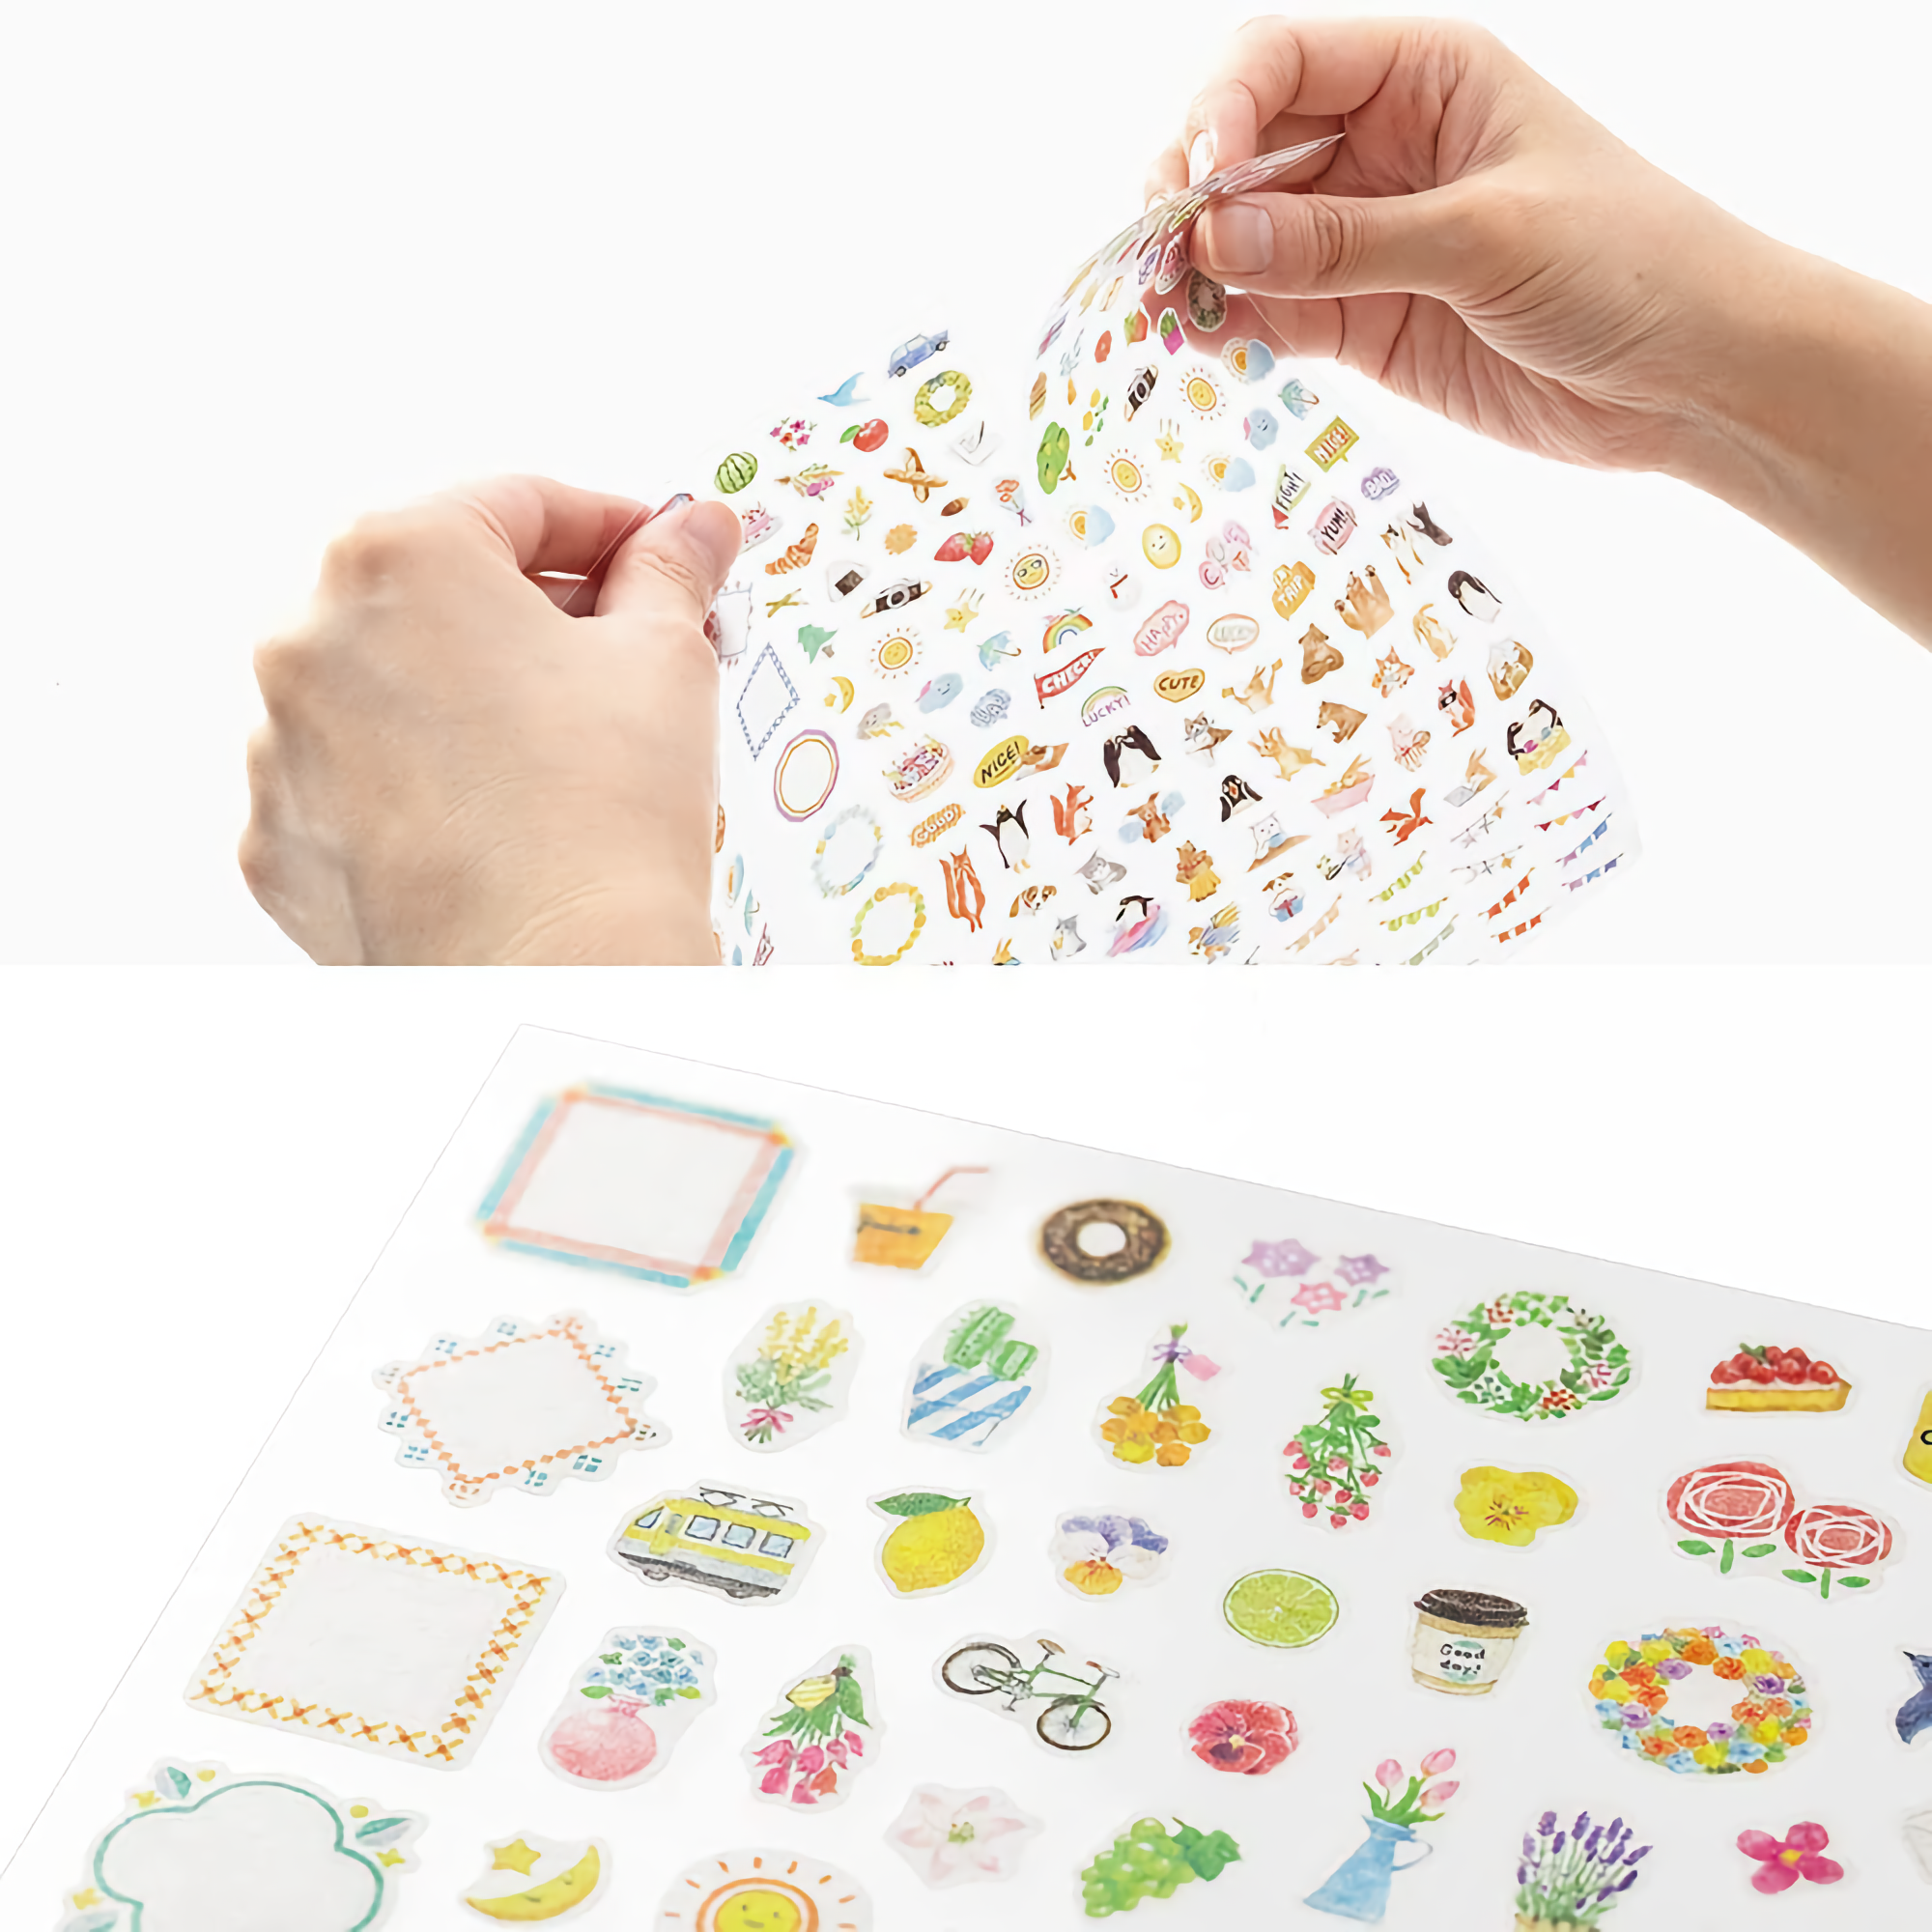 Midori Diary with Stickers Gray